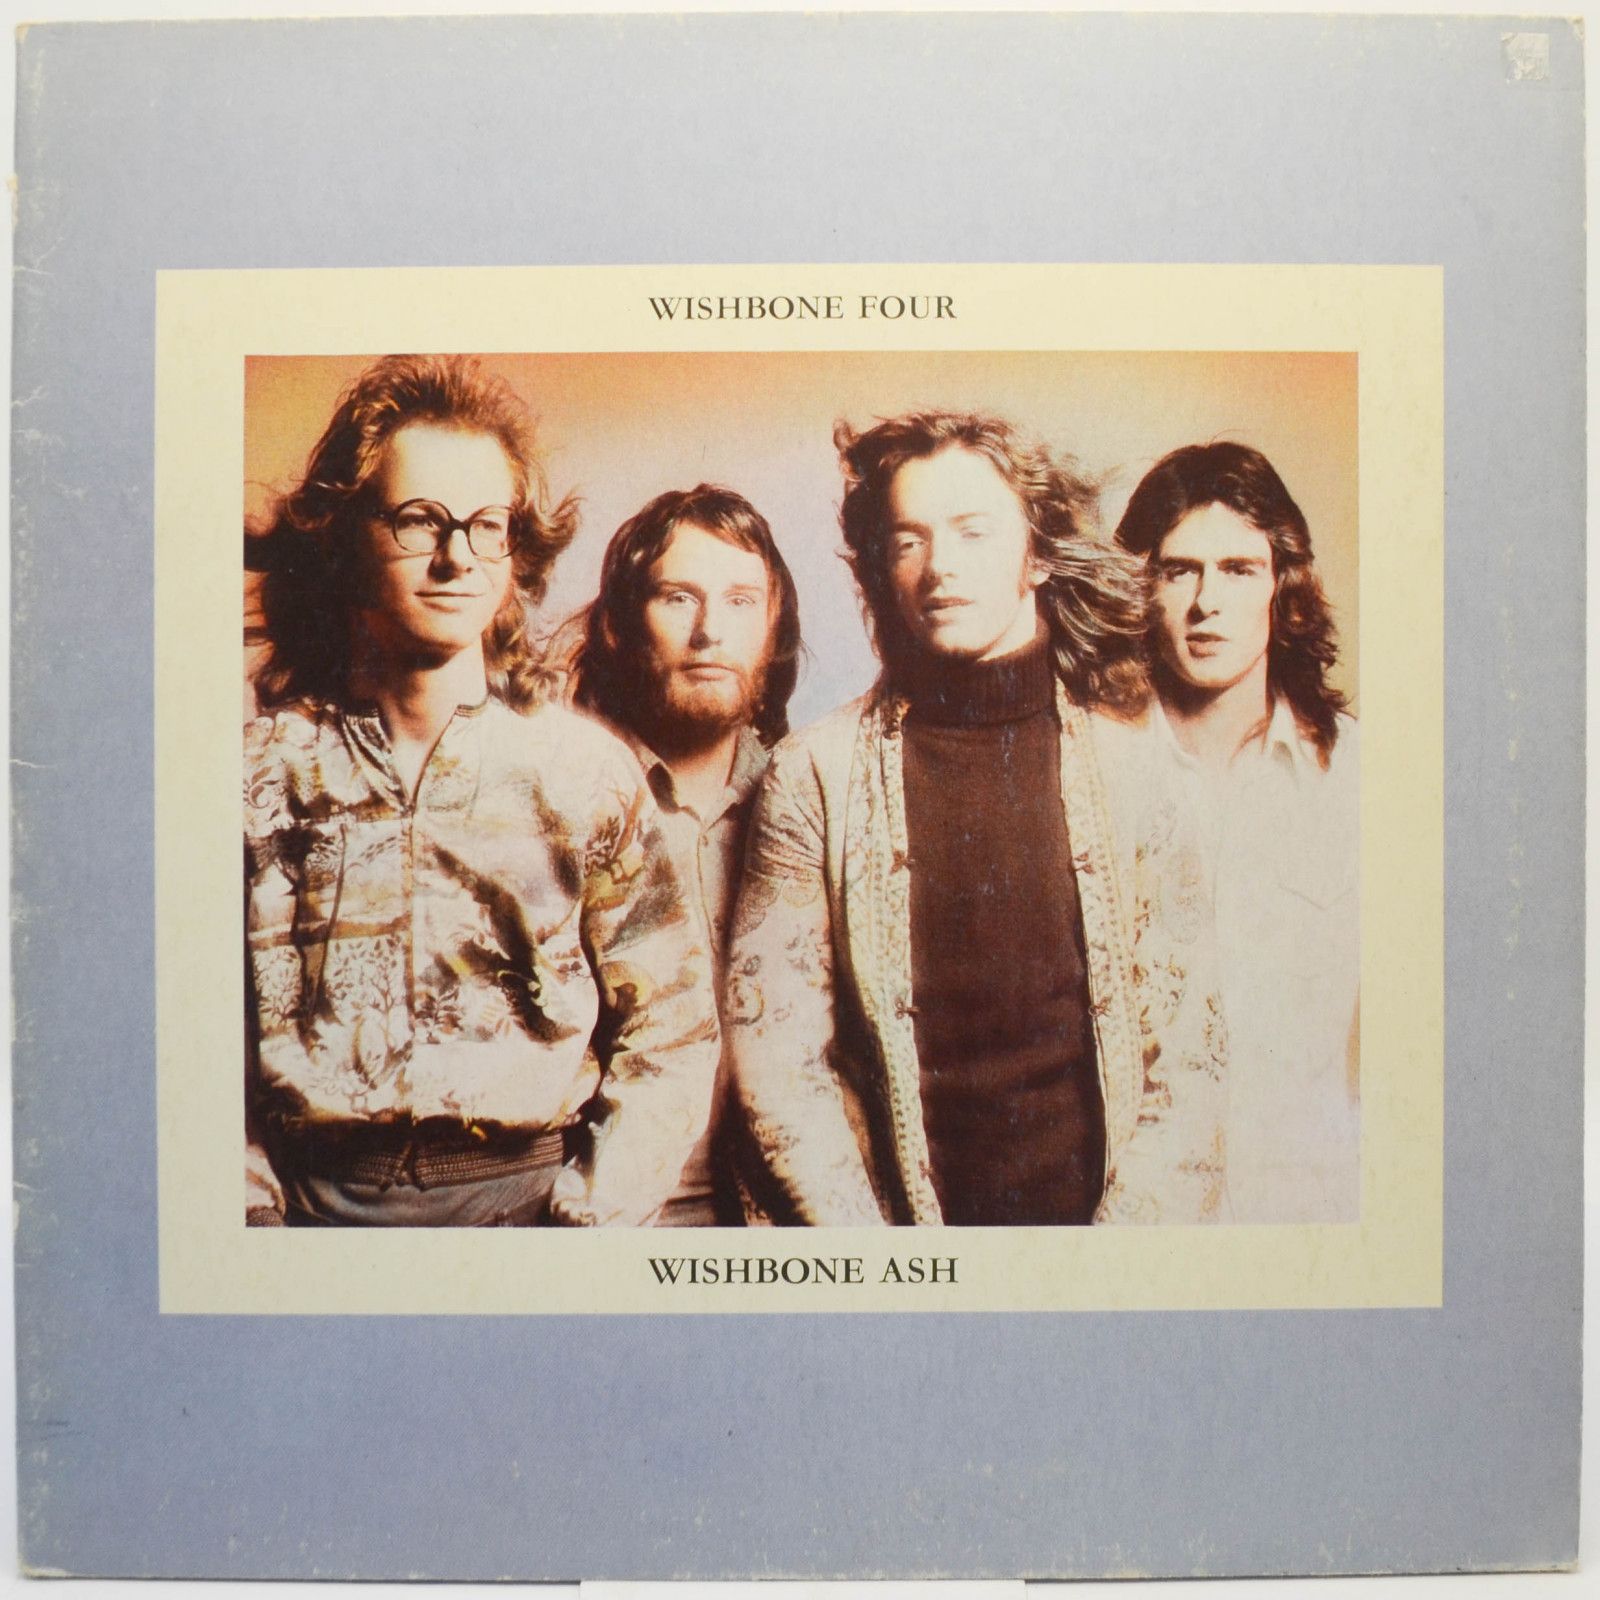 Wishbone Ash — Wishbone Four, 1973